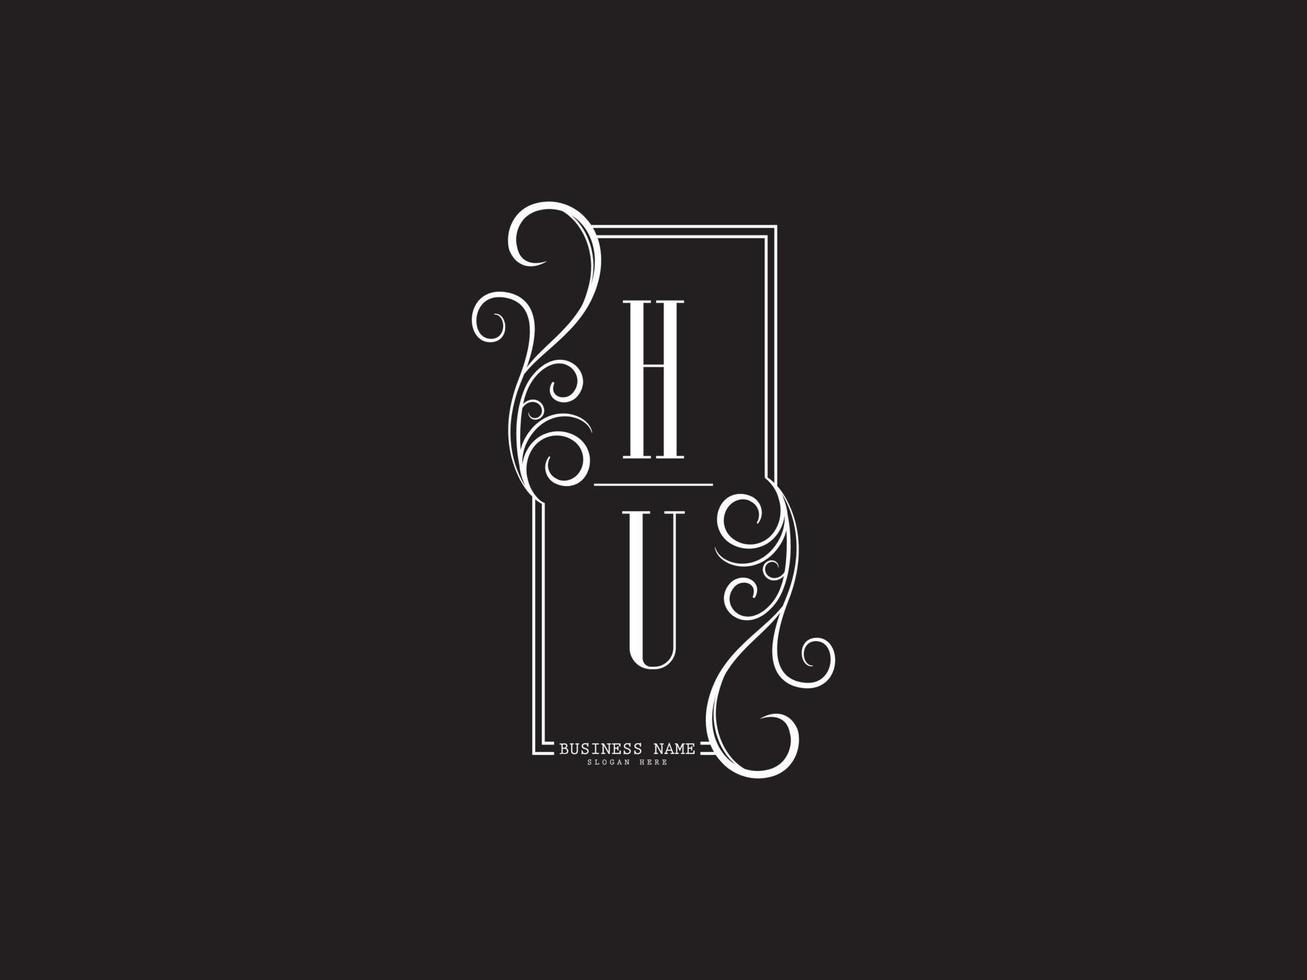 minimalista hu uh design de imagem vetorial de carta de logotipo de luxo vetor